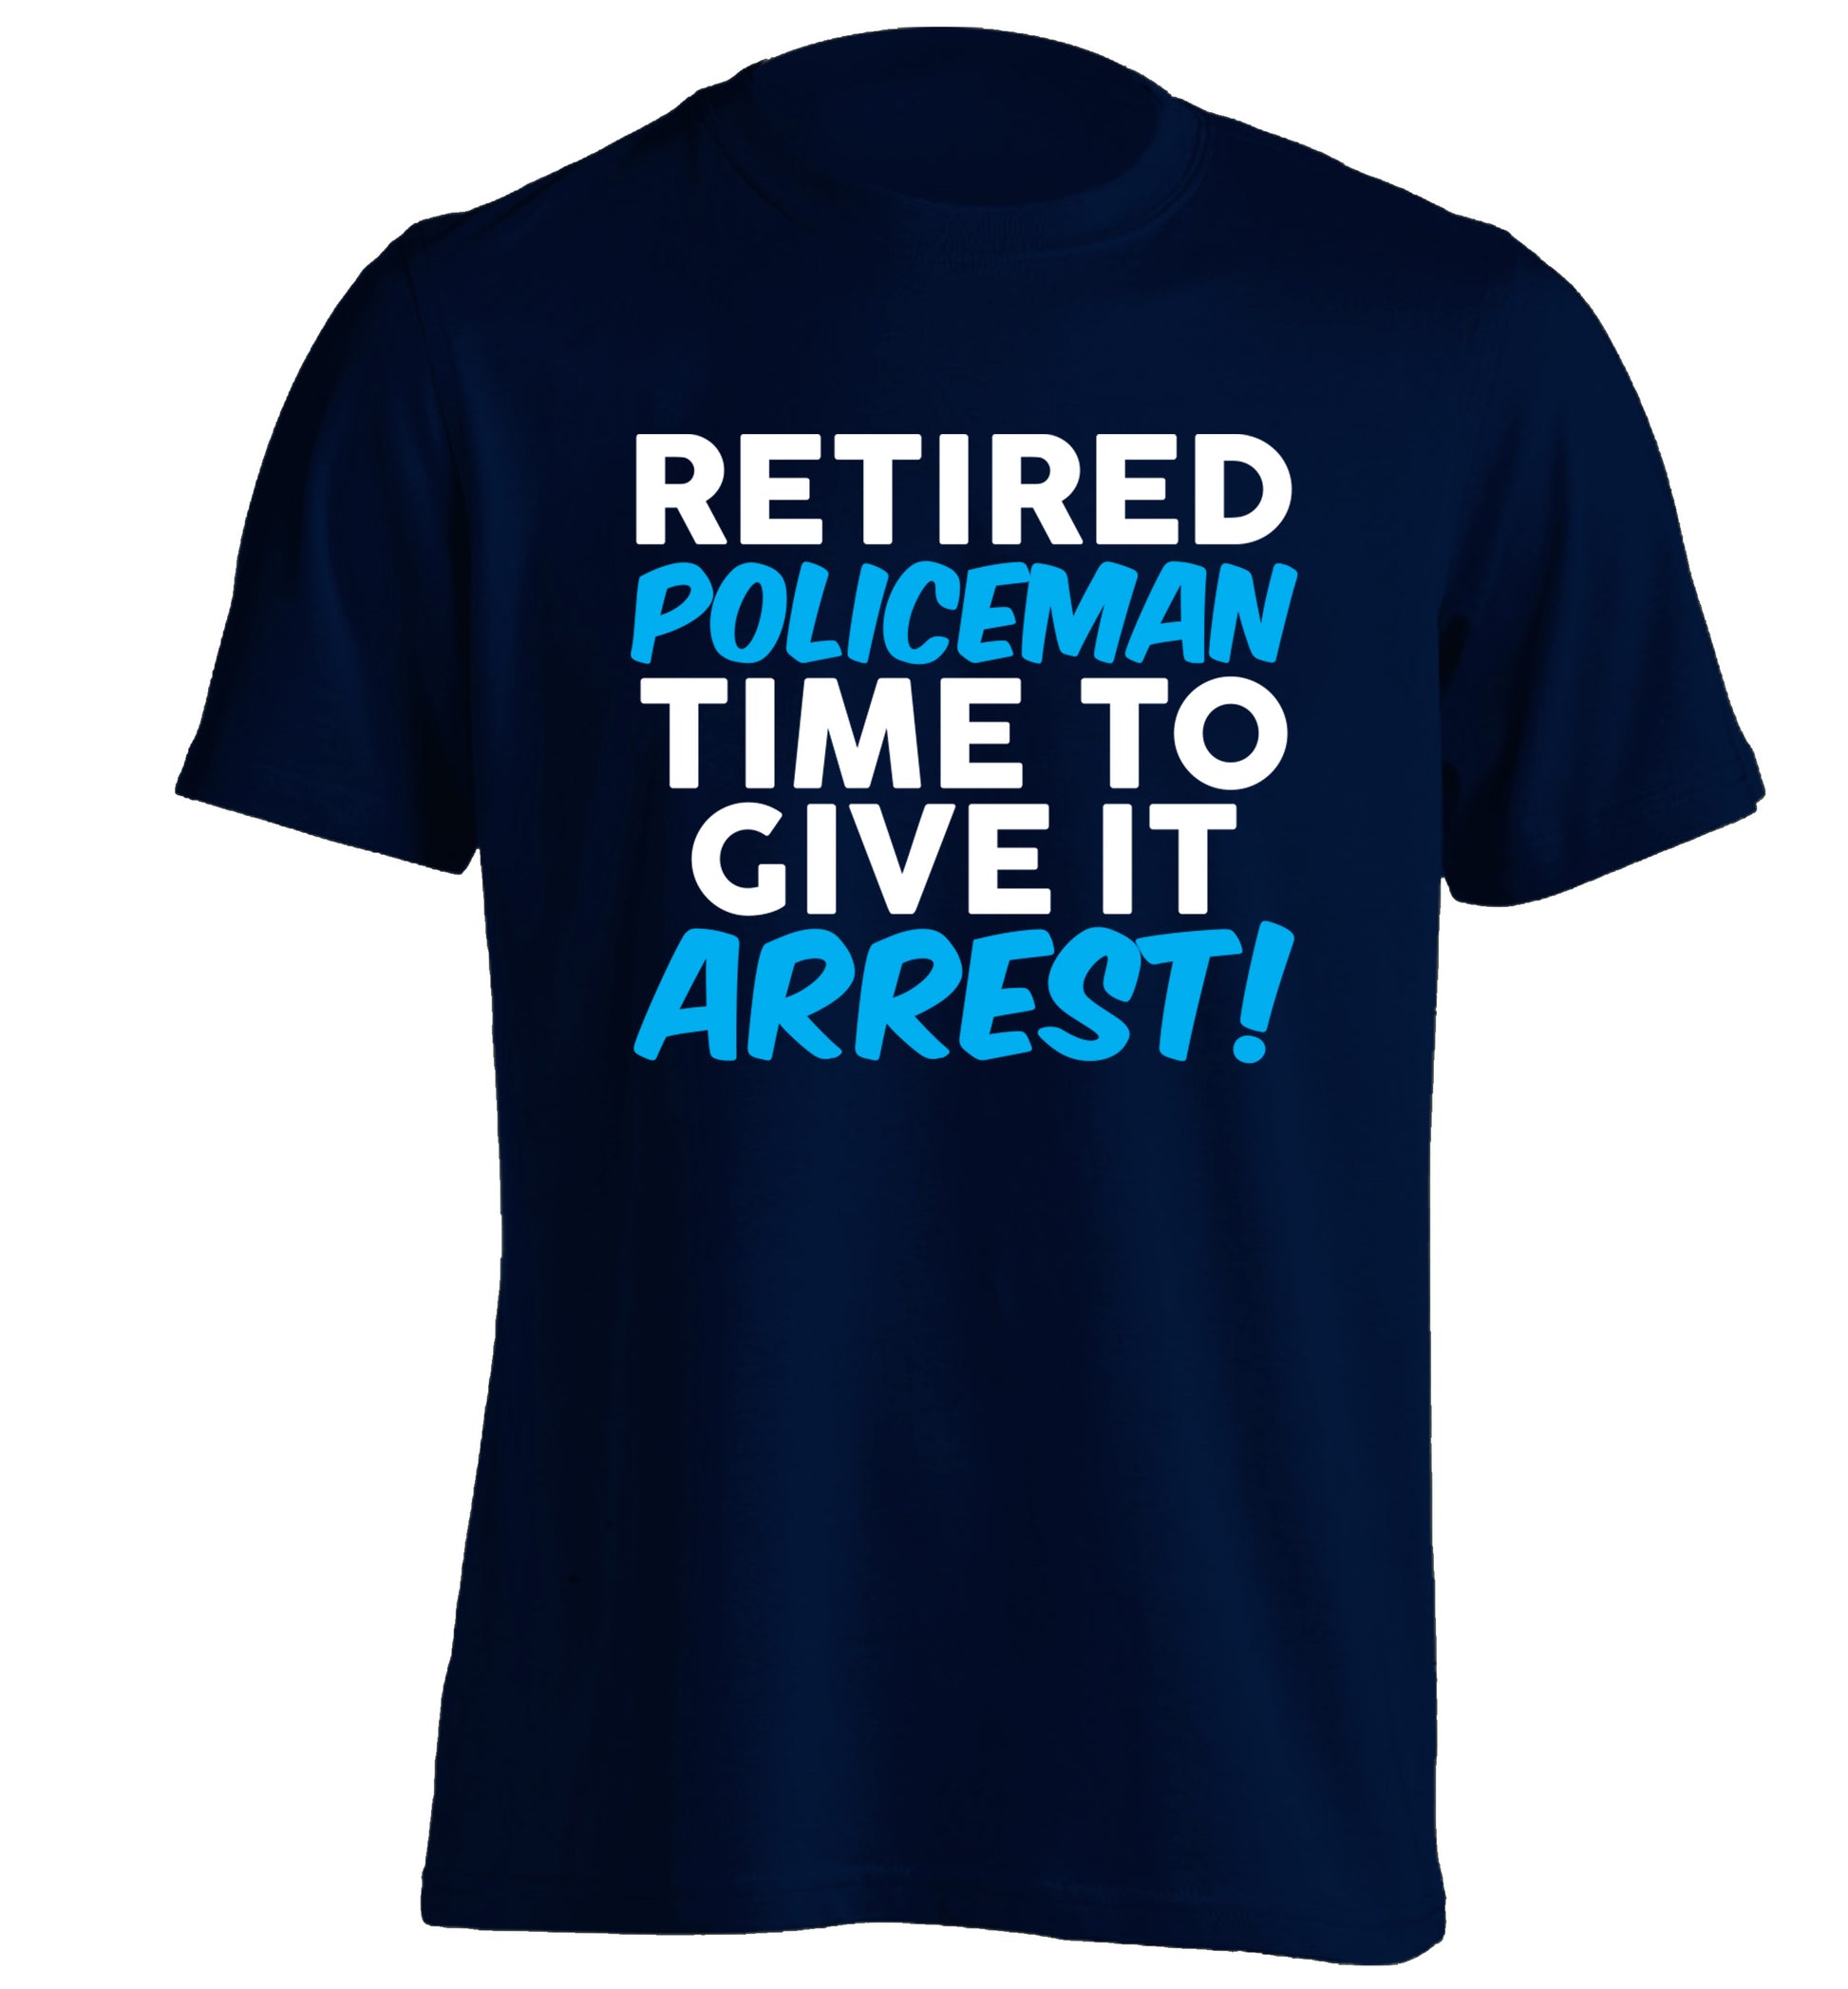 Retired policeman give it arresst! adults unisex navy Tshirt 2XL